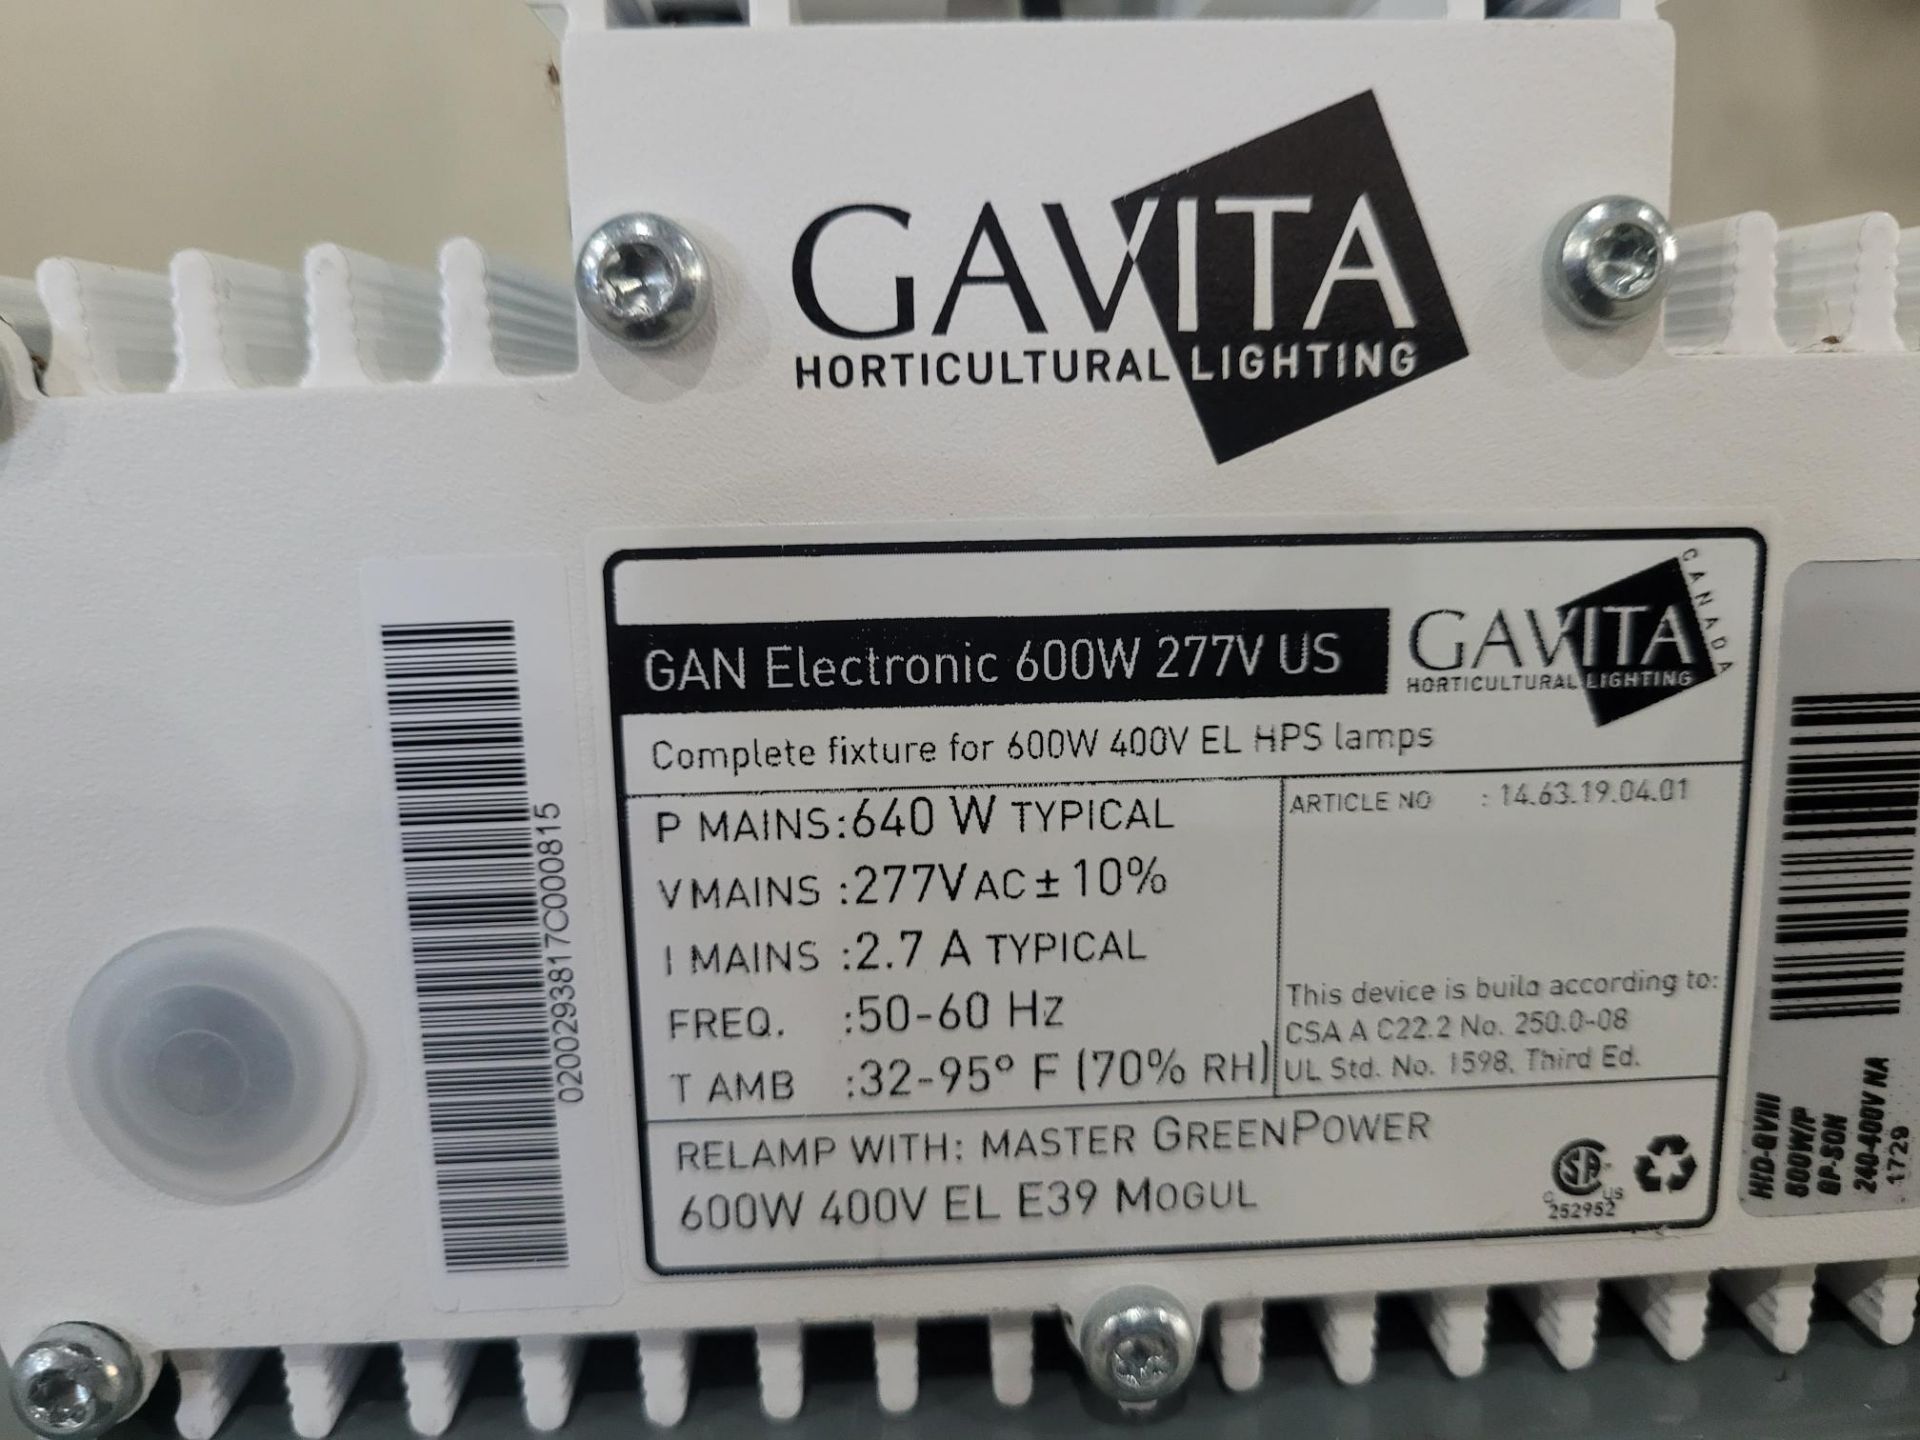 Lot of (50)- Used Gavita Pro Classic Grow Lights 600 SE Fixture 277V w/600 watt EL lamp bulbs - Image 5 of 7